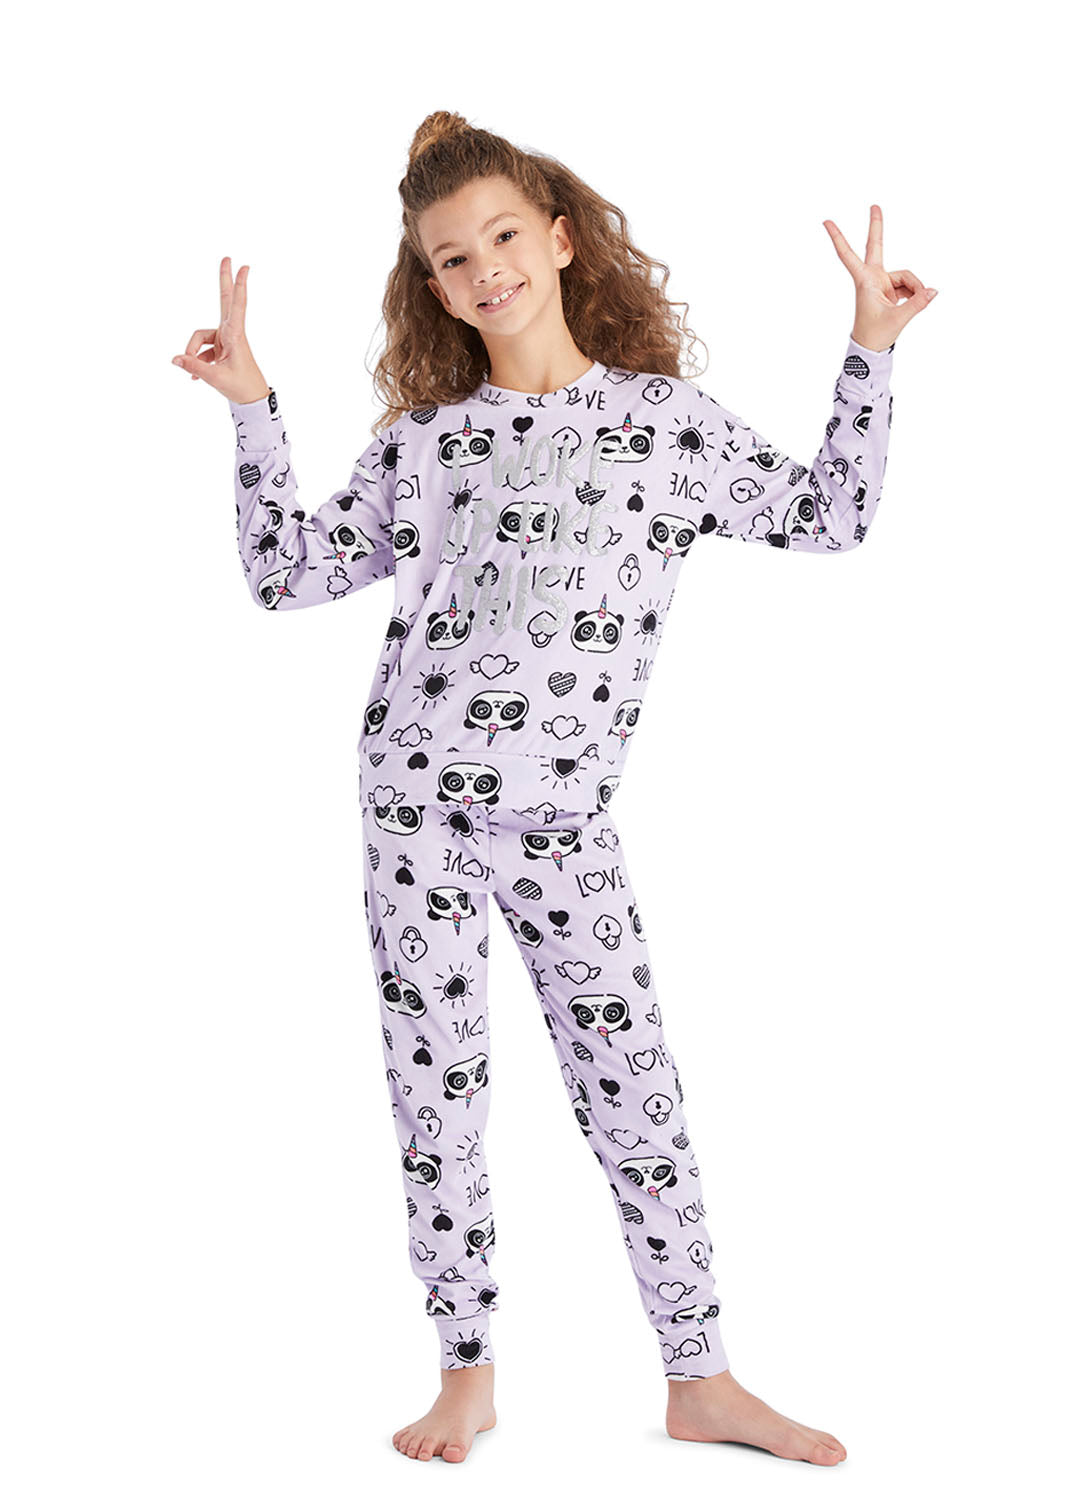 Fun Girl wearing Pajama Set with Panda Print in lavender colour